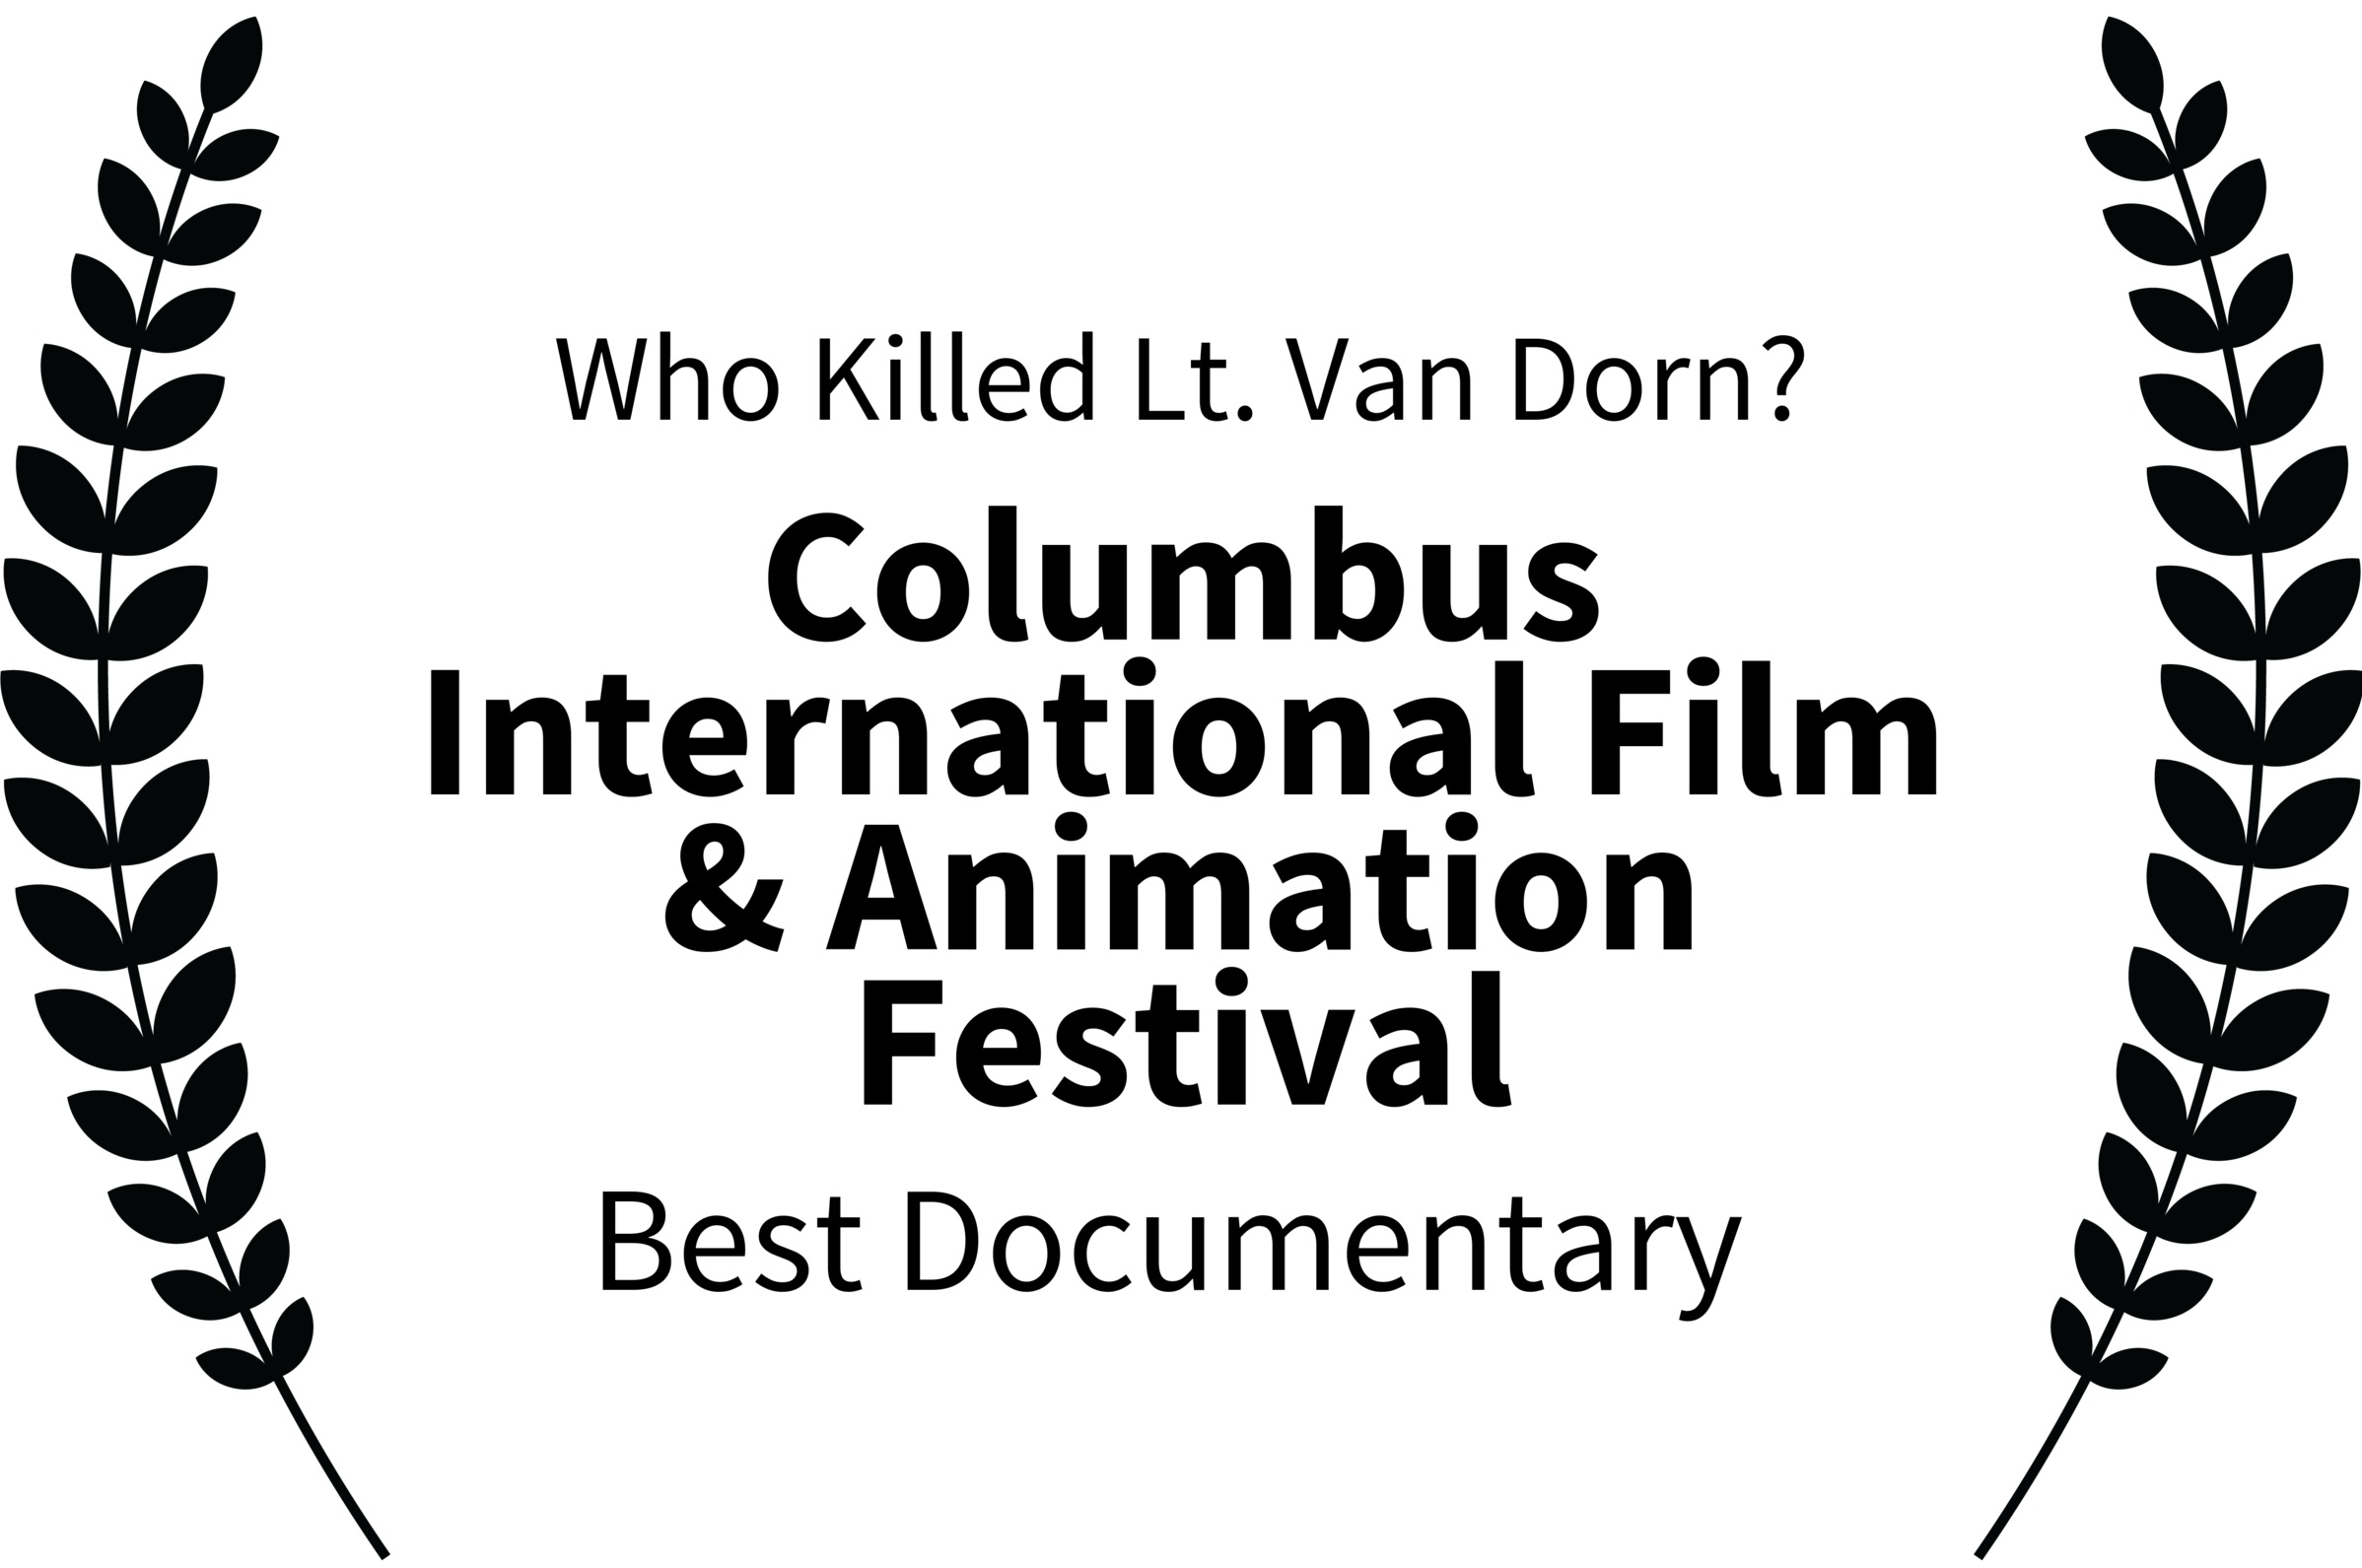 WhoKilledLt.VanDorn-ColumbusInternationalFilmAnimationFestival-BestDocumentary.png